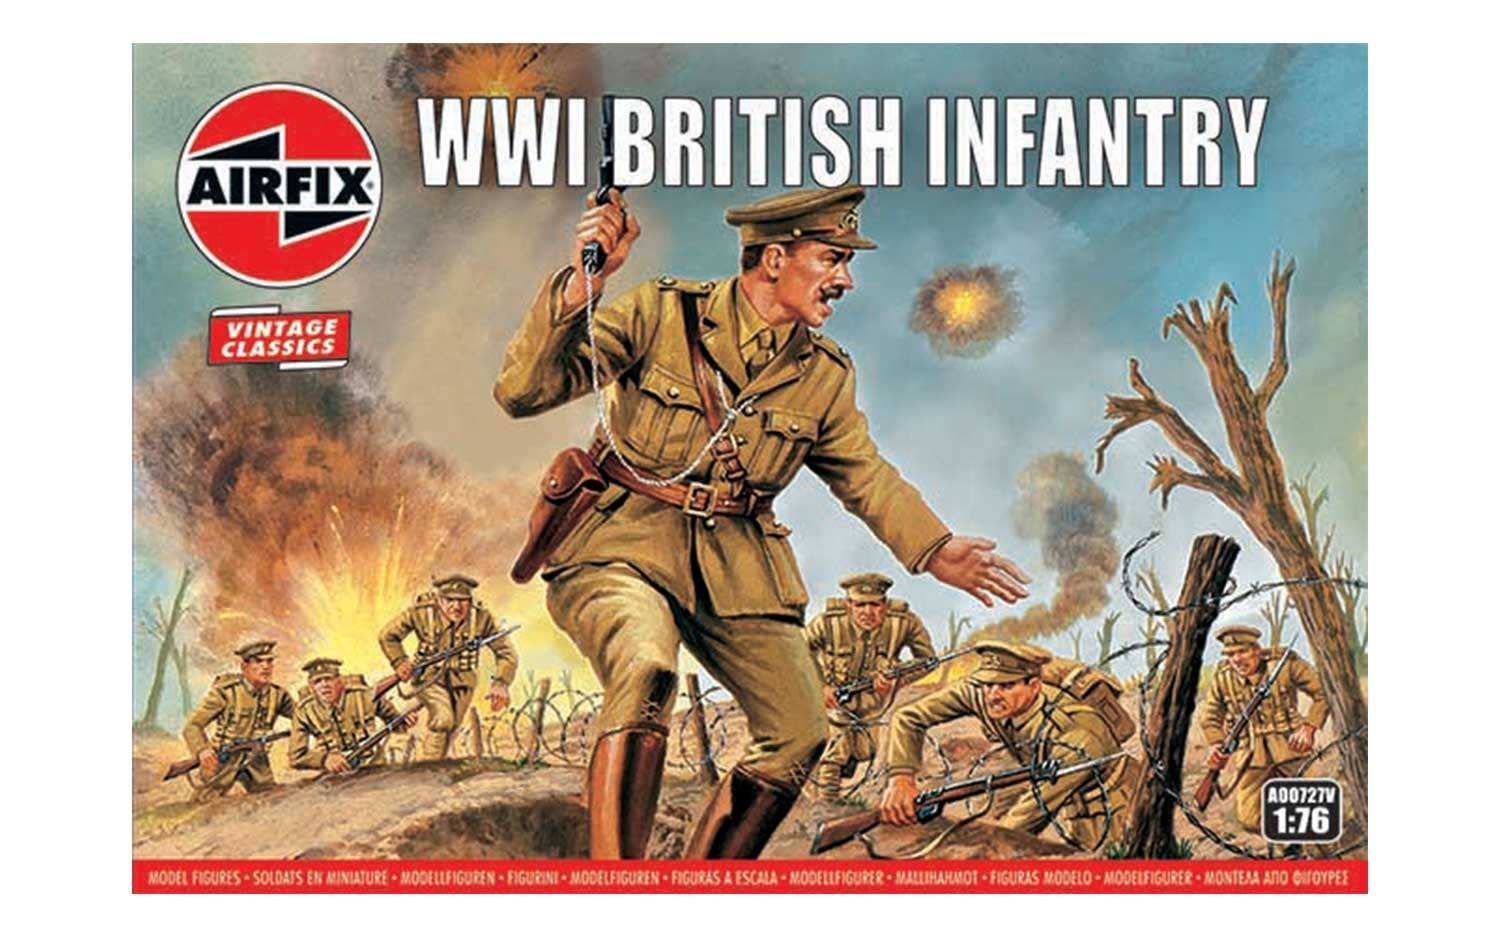 Vintage Classics - WWI British Infantry